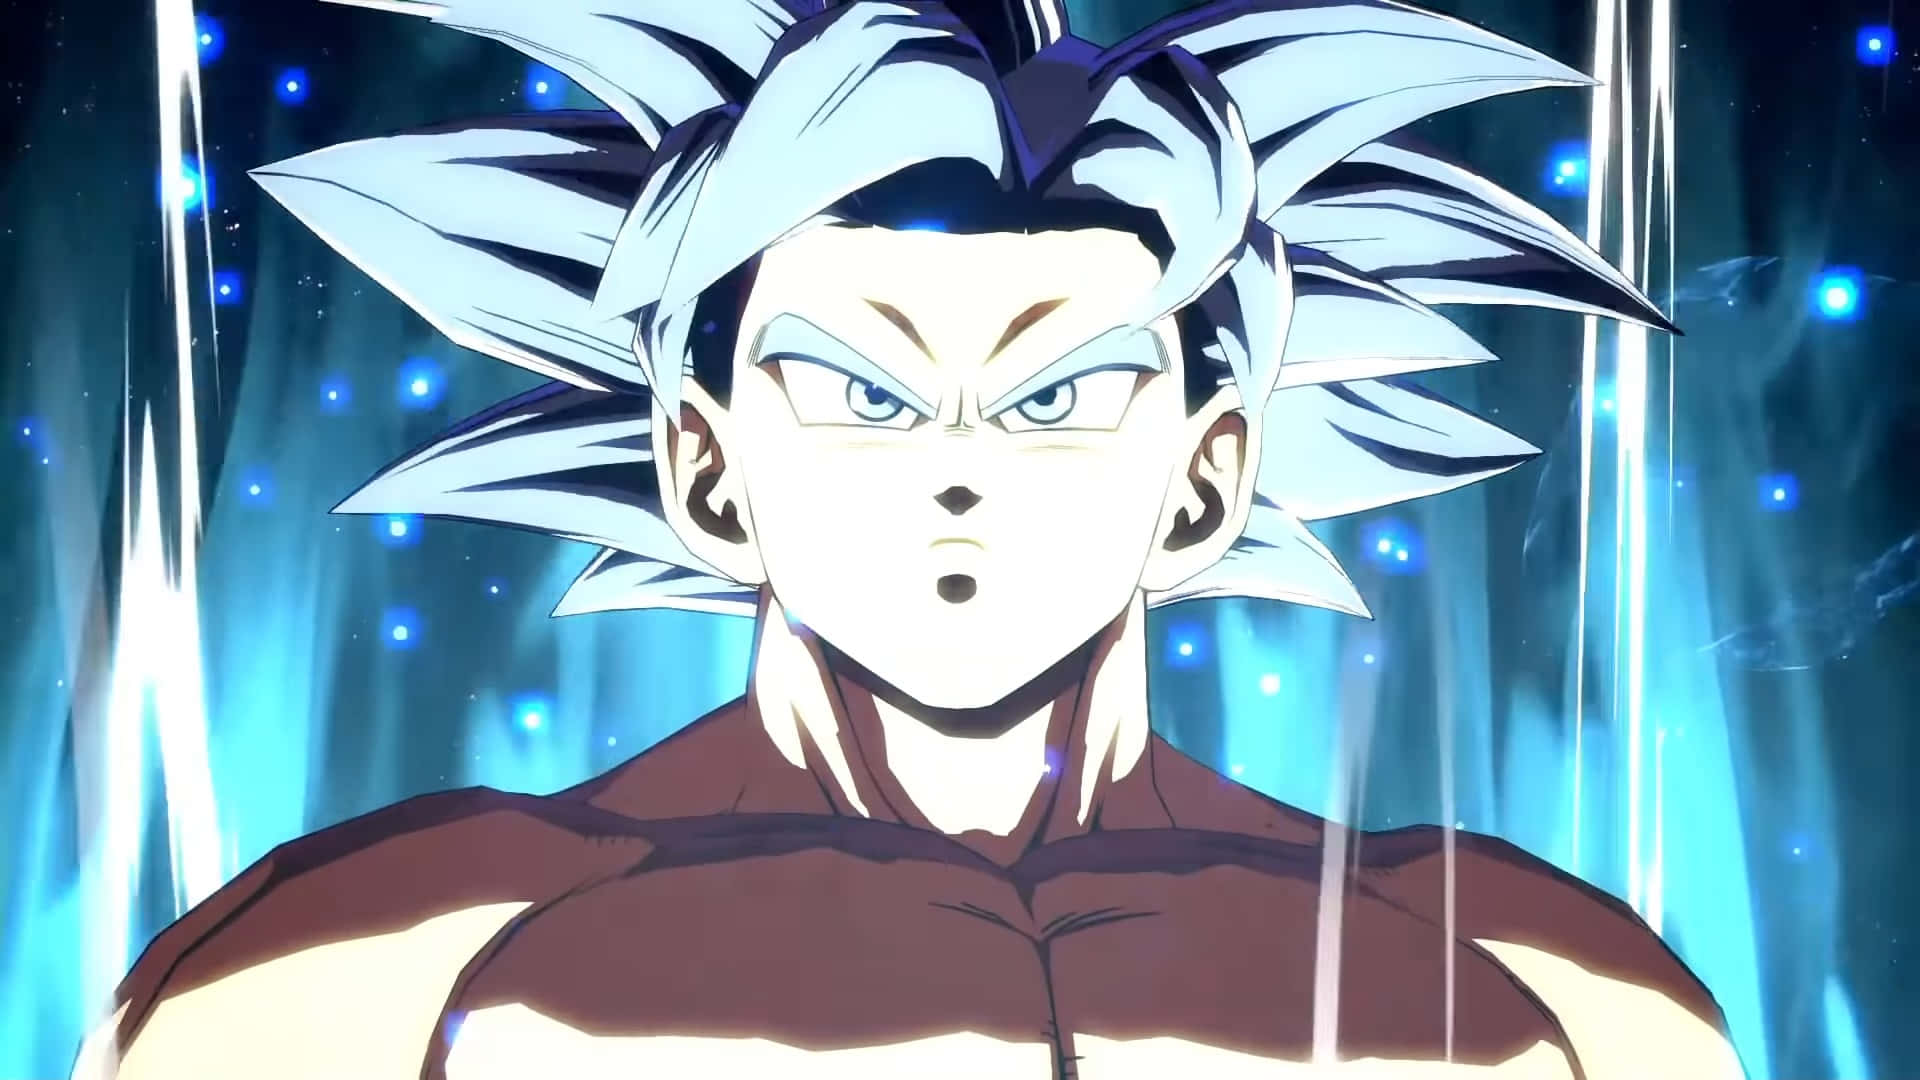 Power Unleashed – Goku in Ultra Instinct Form